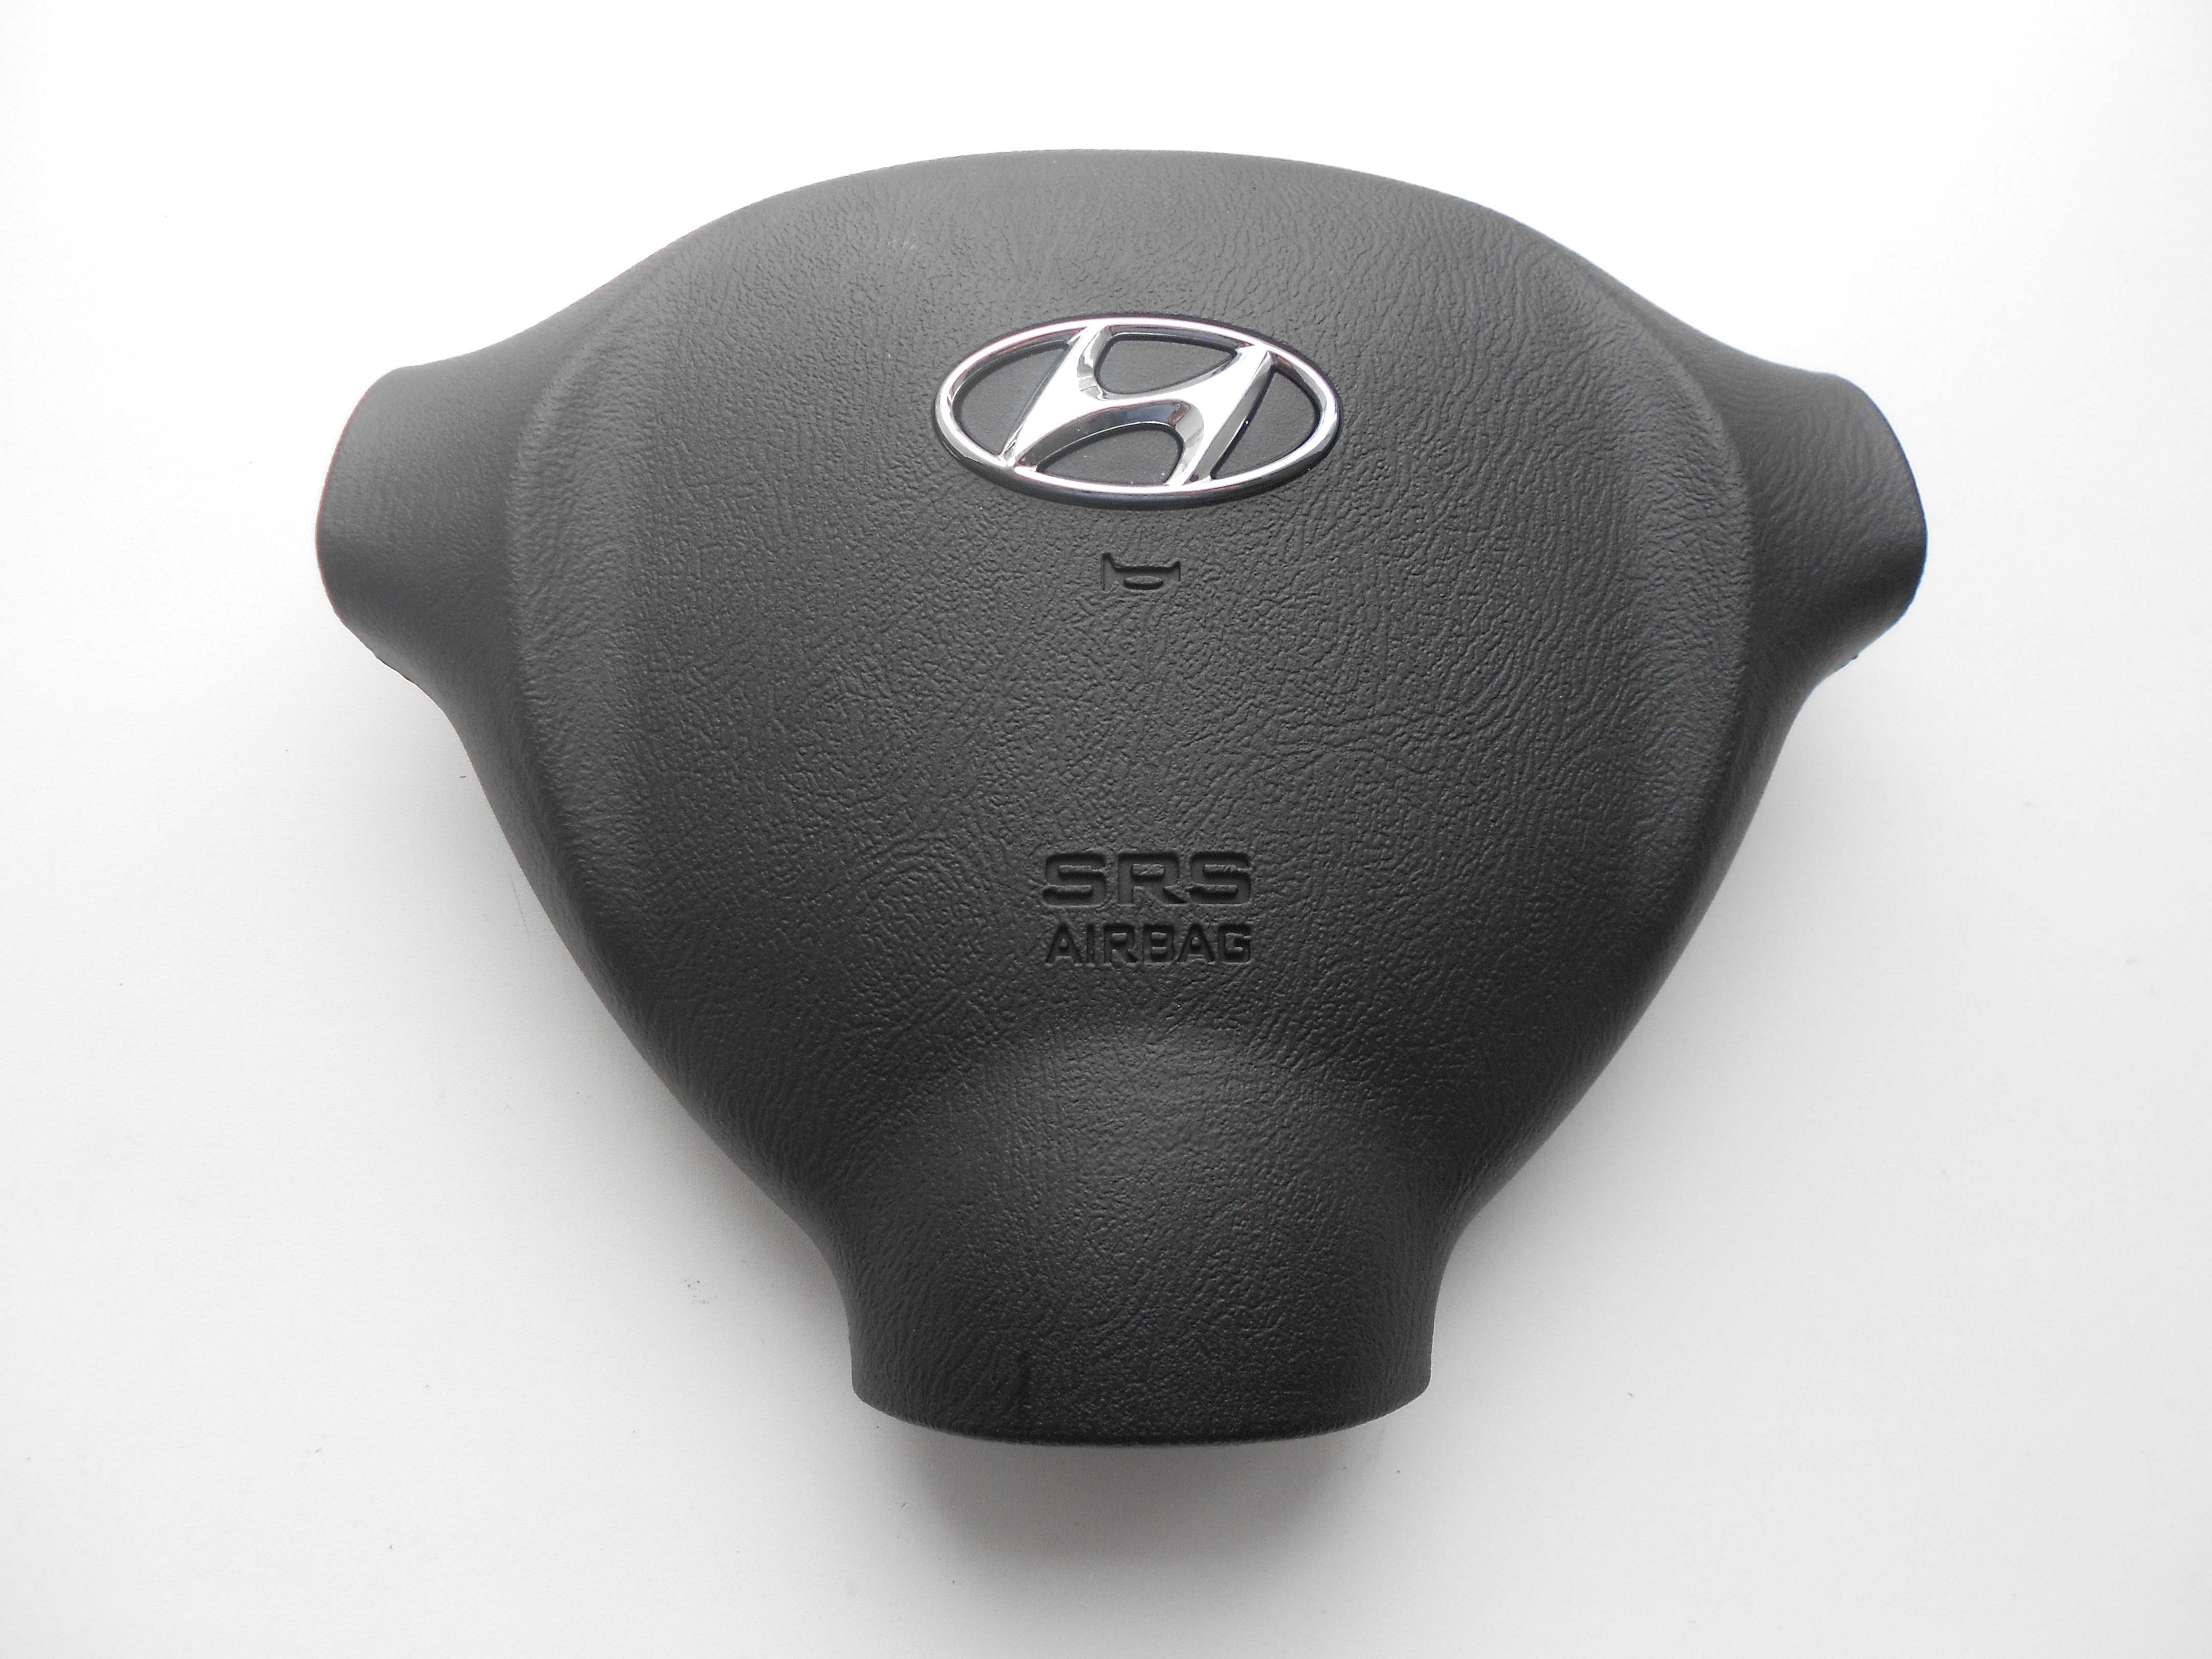 Система подушки безопасности. Крышка airbag Hyundai Santa Fe Classic. Airbag заглушка муляж Hyundai Santa-Fe. Заглушка руля Санта Фе. Подушка безопасности Хендай Санта Фе.